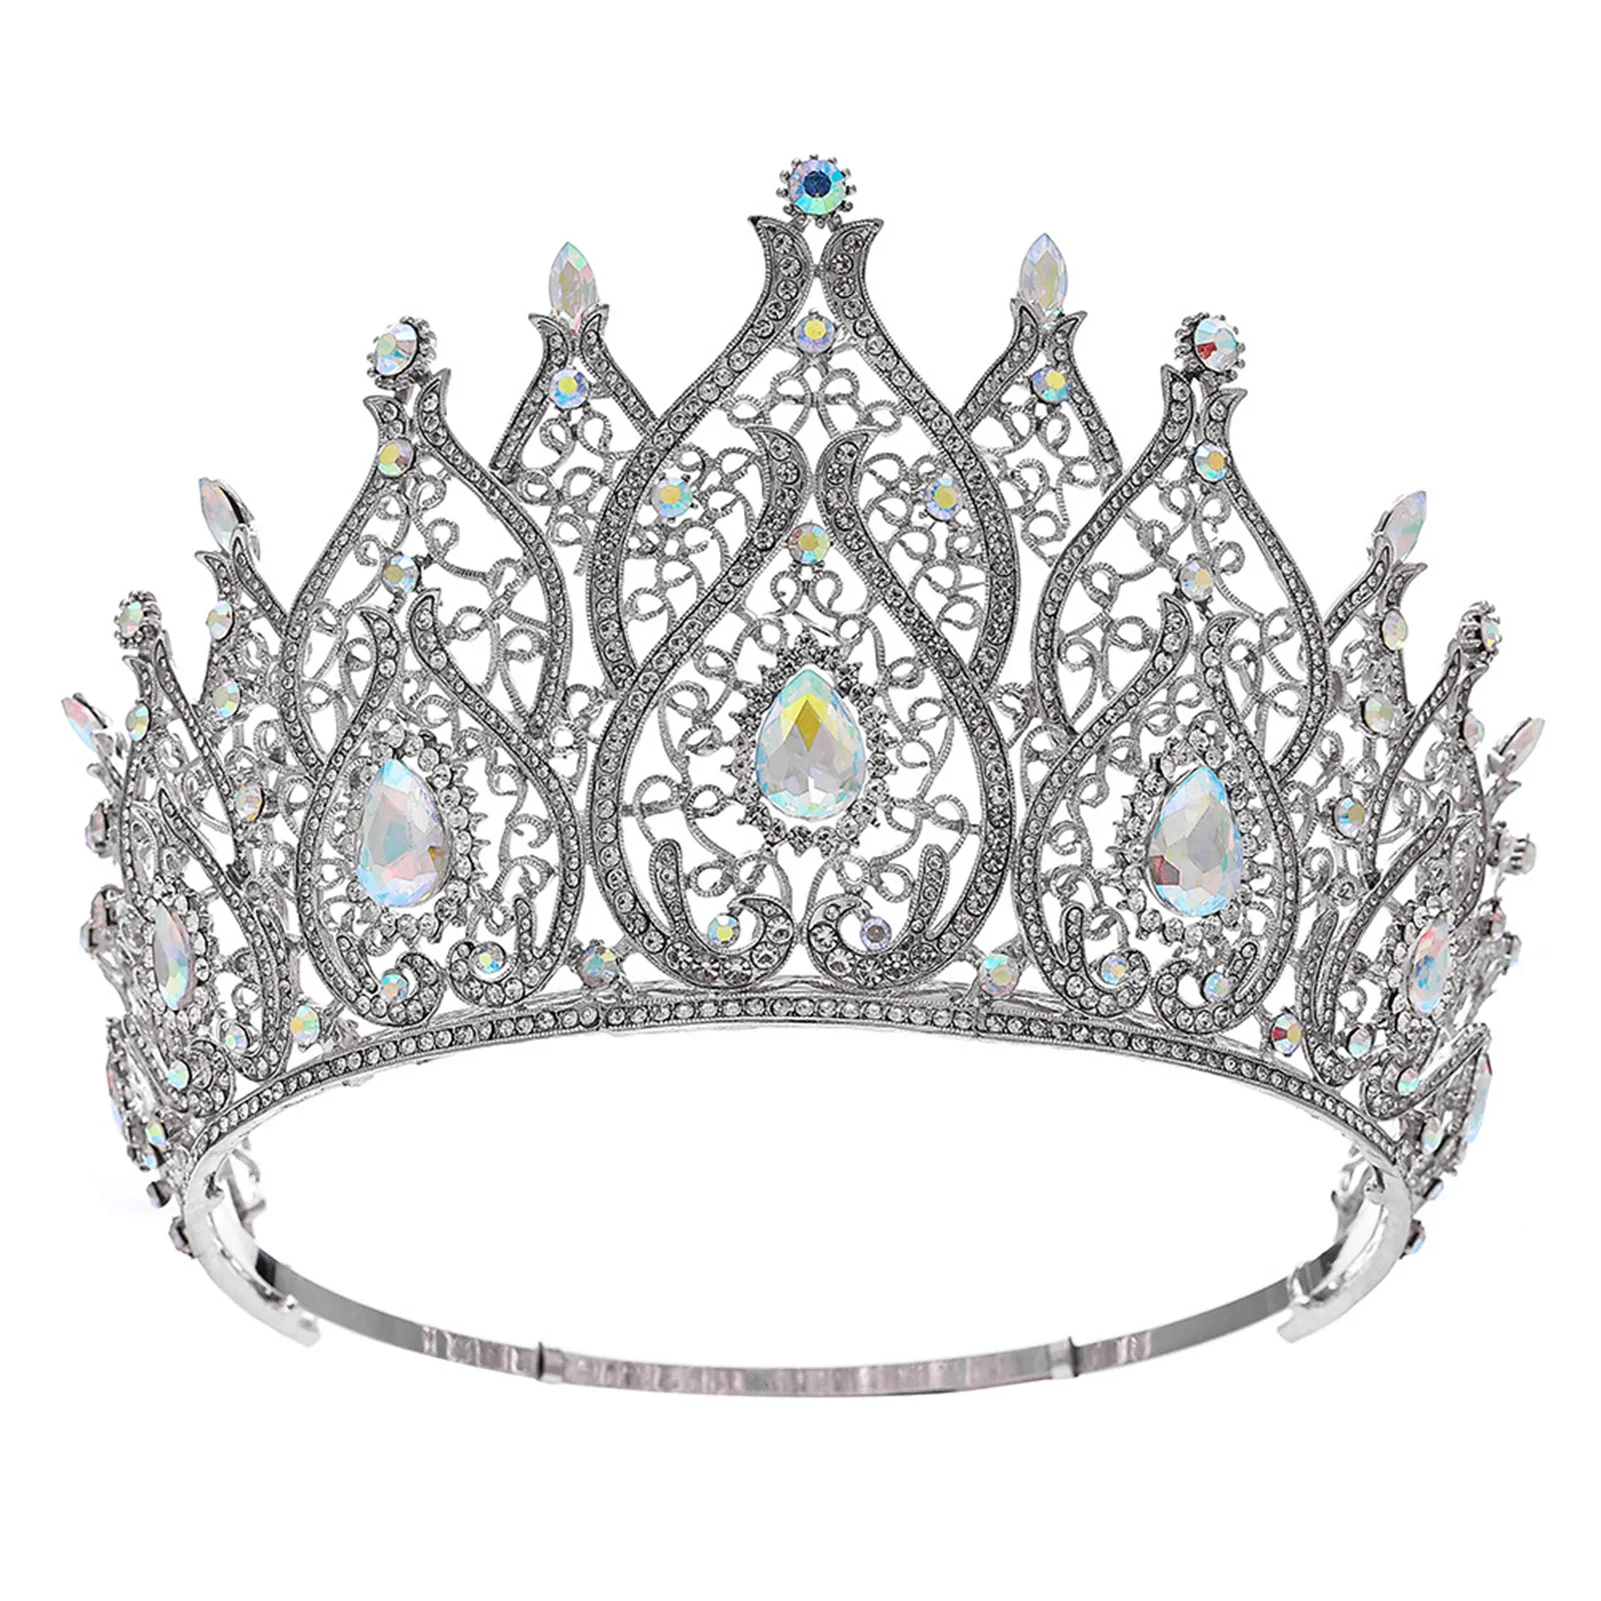 

Baroque Crystal Round Crown Tiara Vintage Rhinestone Women Crowns And Tiaras Headbands Bridal Wedding Hair Accessories Jewelry